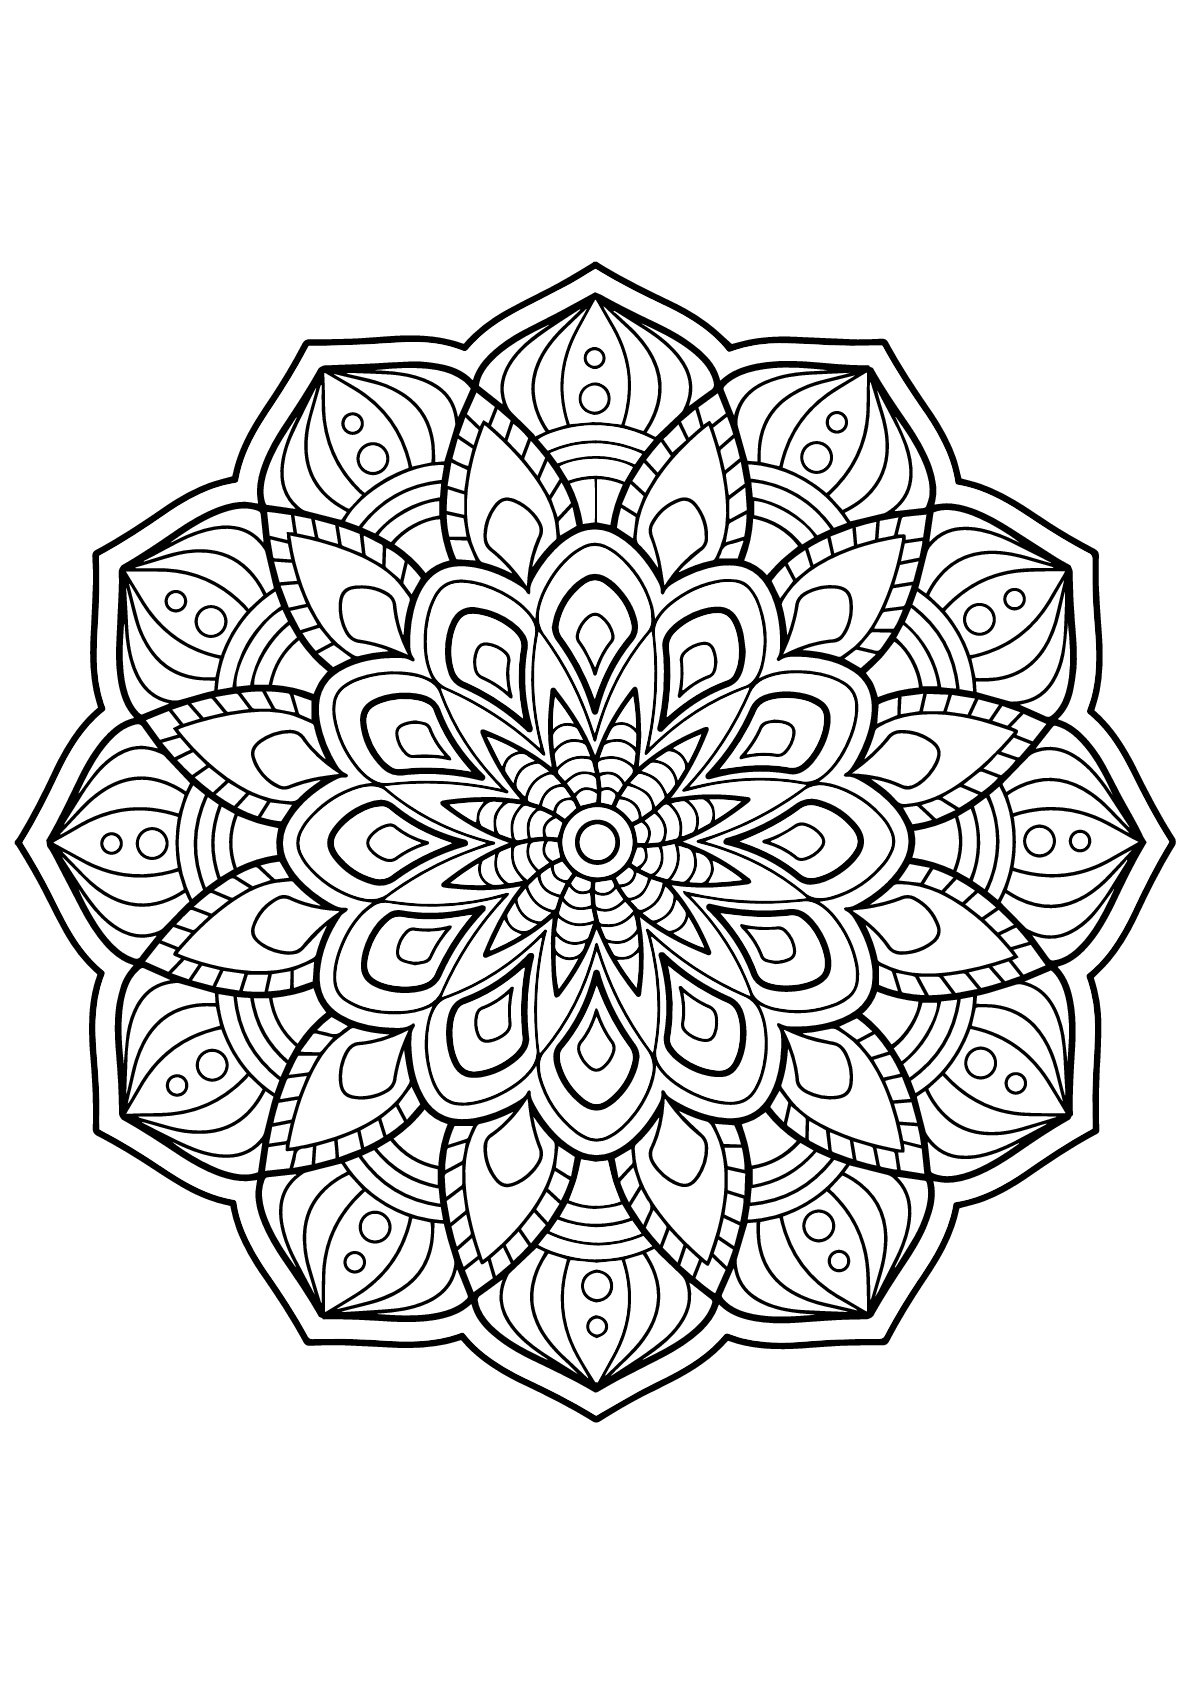 Mandala 24 coloring page - Coloringcrew.com